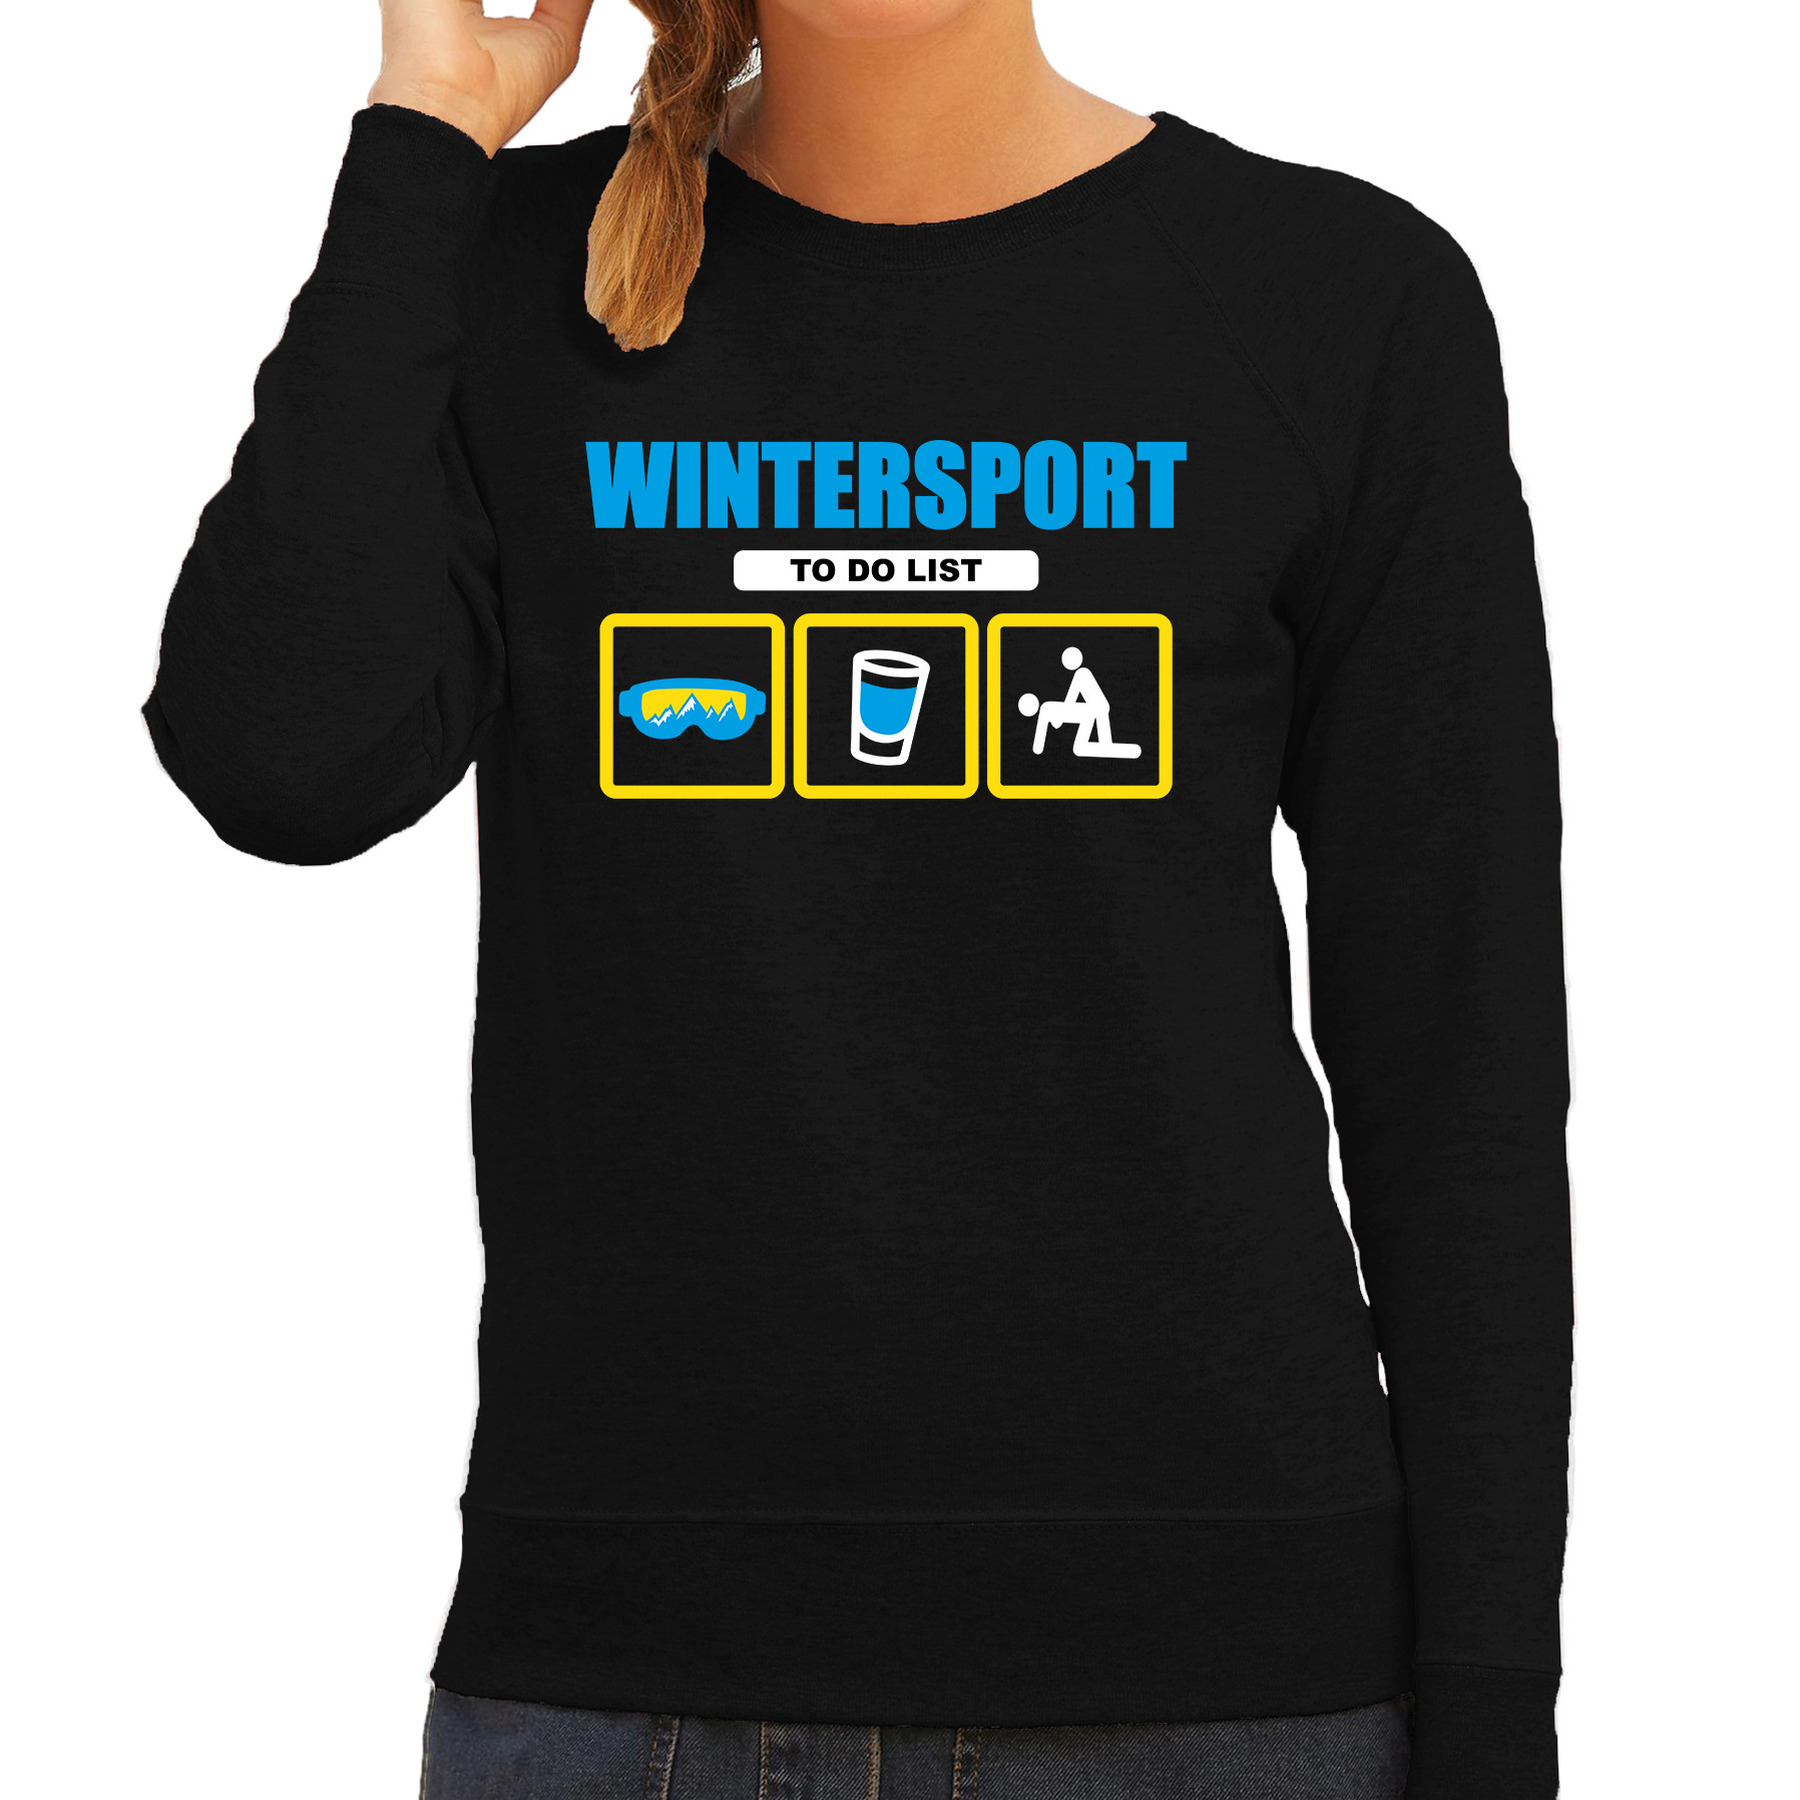 Apres ski trui winterport to do list zwart dames Wintersport sweater Foute apres ski outfit